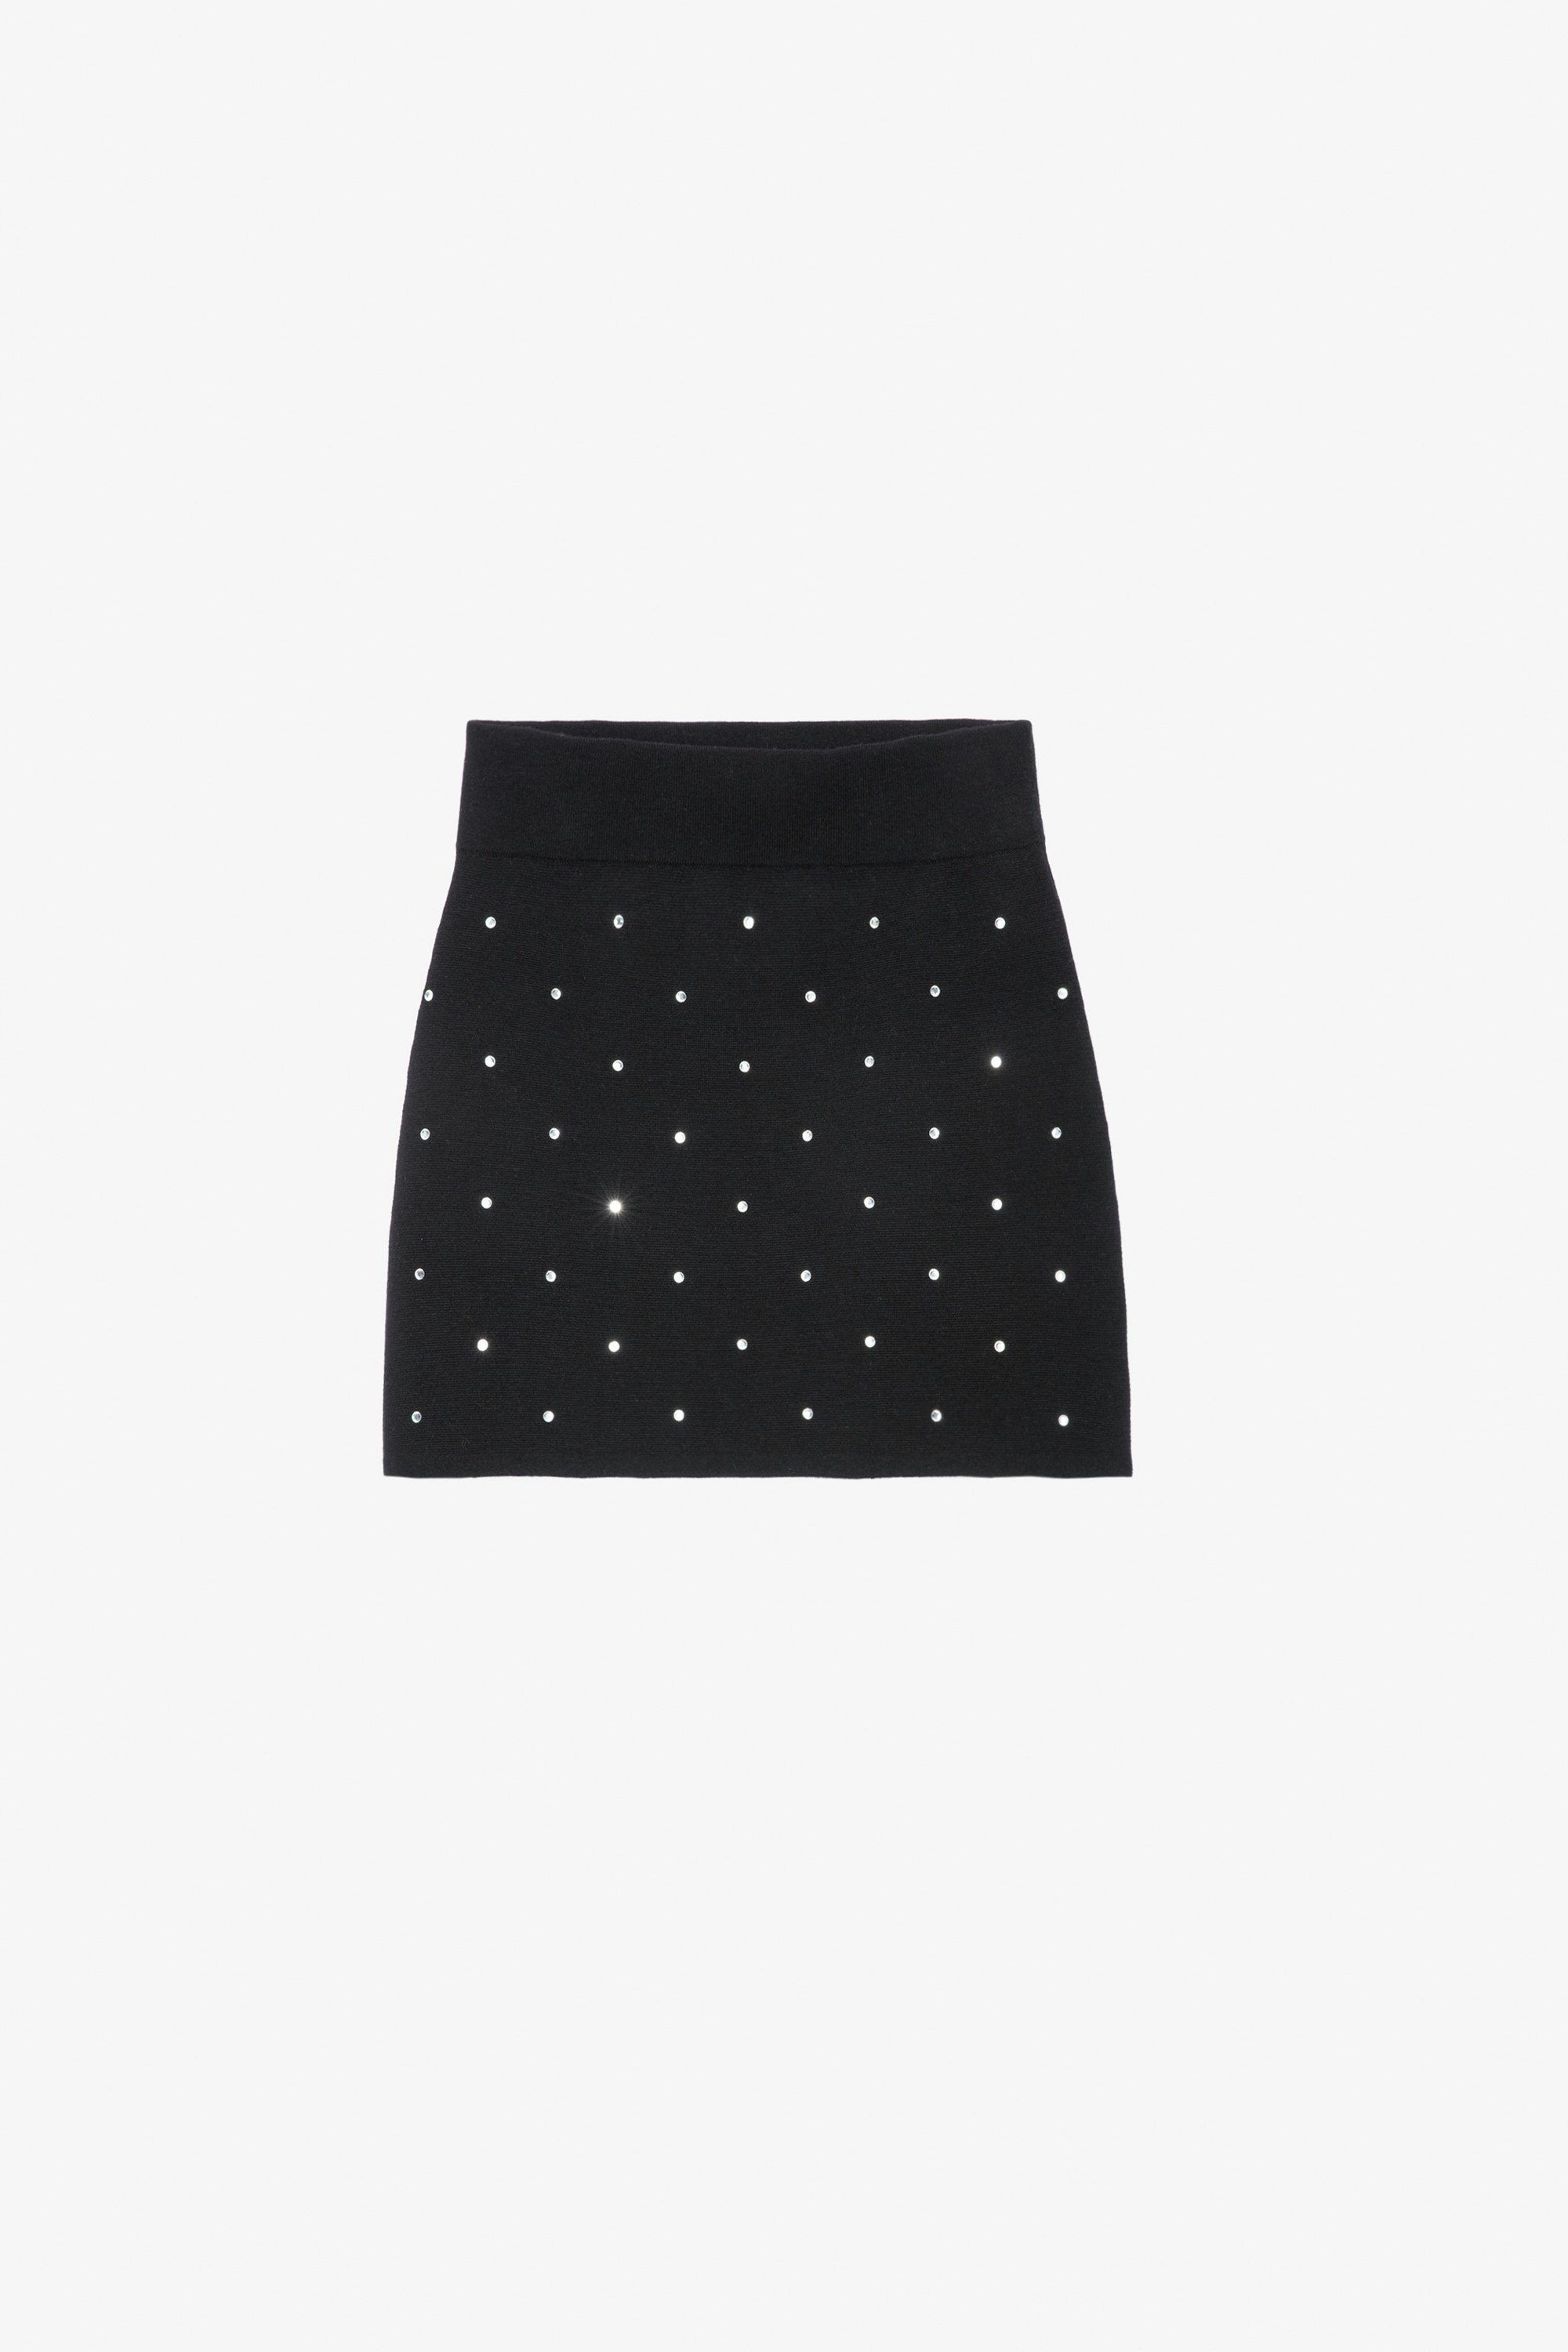 Mitty Diamanté Skirt - Women’s short fitted black merino wool skirt with diamanté embellishment.